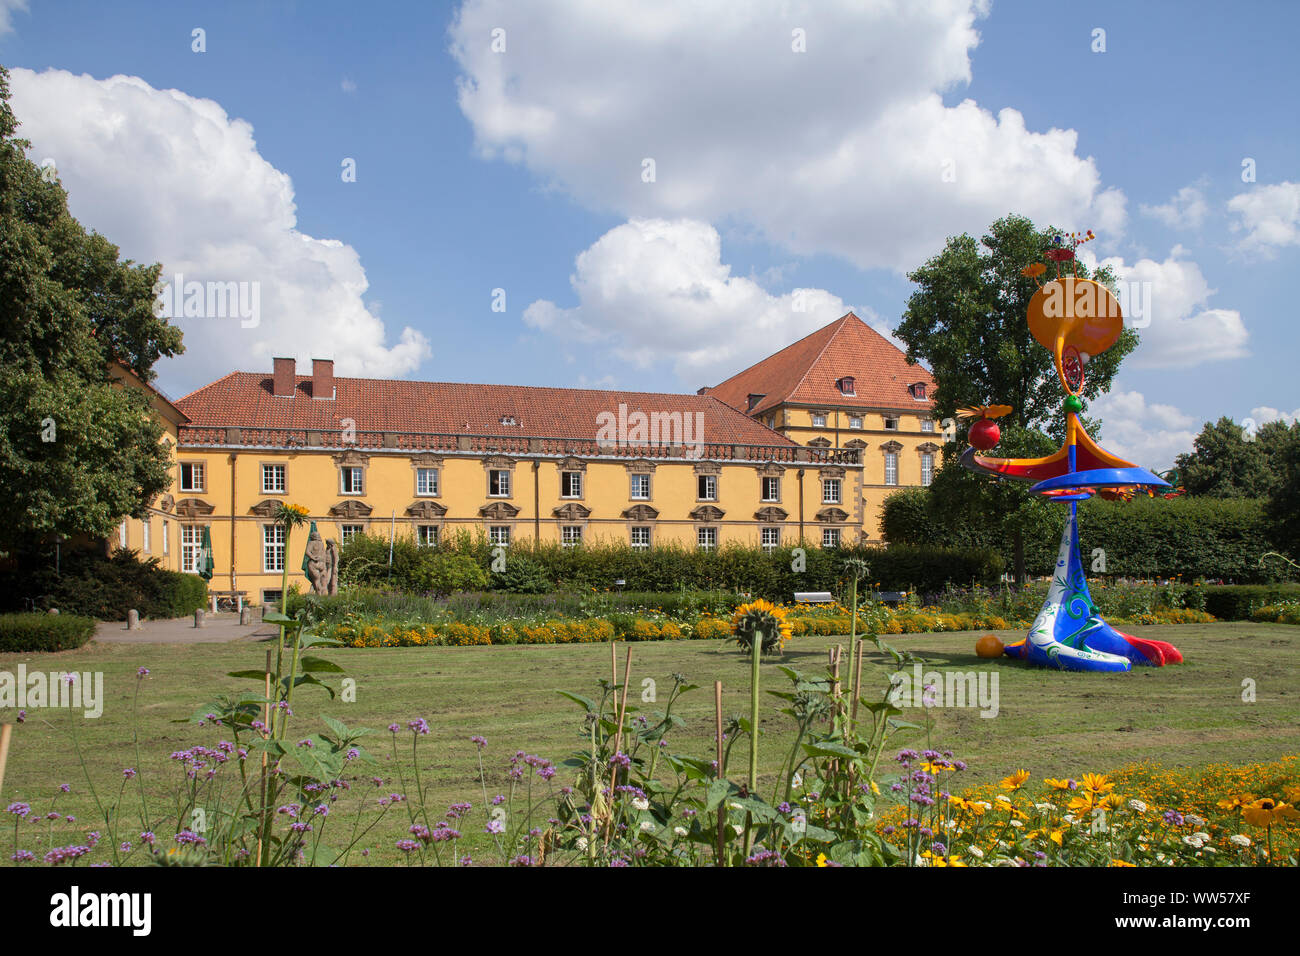 Prince-archbishop castle, site of the university, OsnabrÃ¼ck, Lower Saxony, Germany, Europe Stock Photo